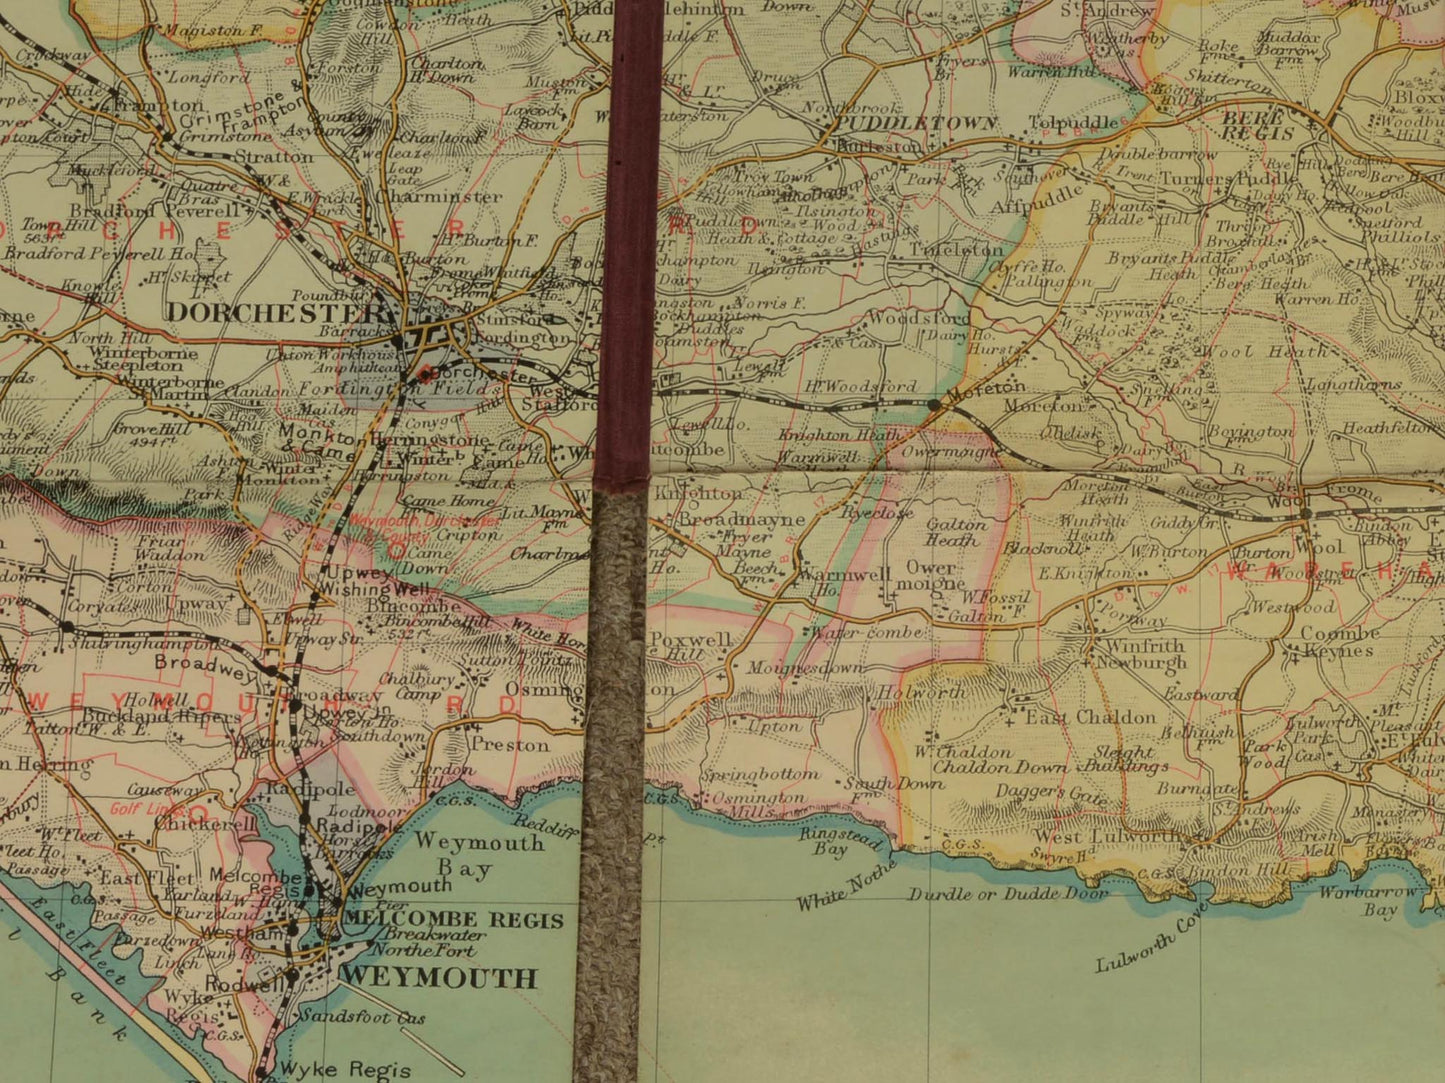 Bacon's New Survey Map of Dorset, published c.1900